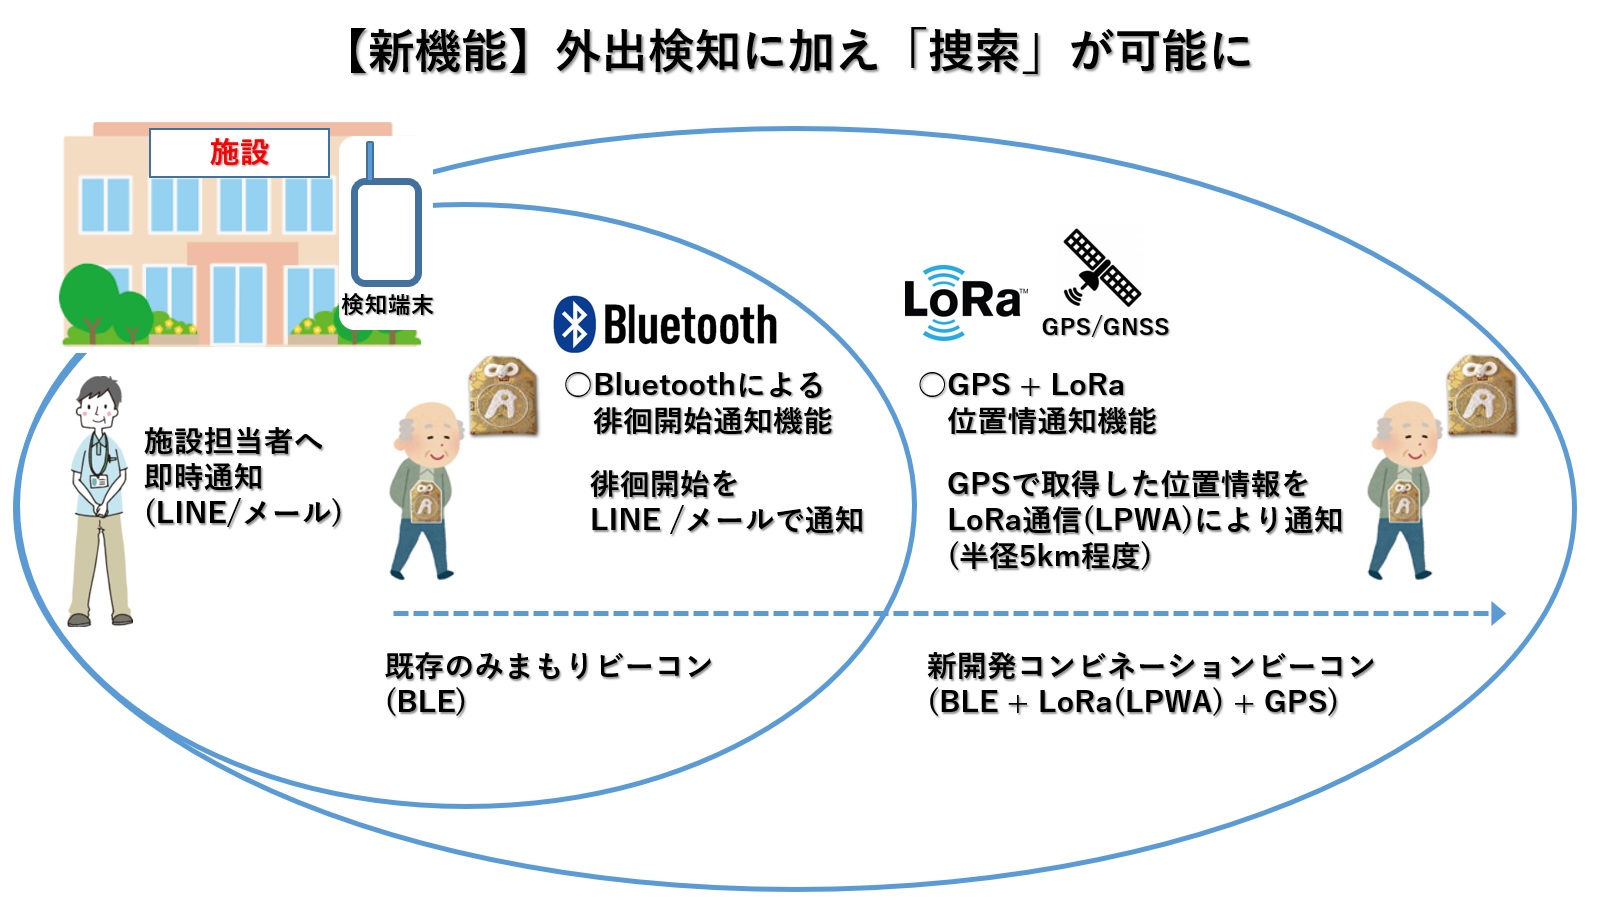 Off Line社 Bluetooth Lora Gps 搭載のコンビネーション ビーコンによる直径１０キロの長距離 みまもりサービス実験に成功 オフラインジャパン株式会社のプレスリリース